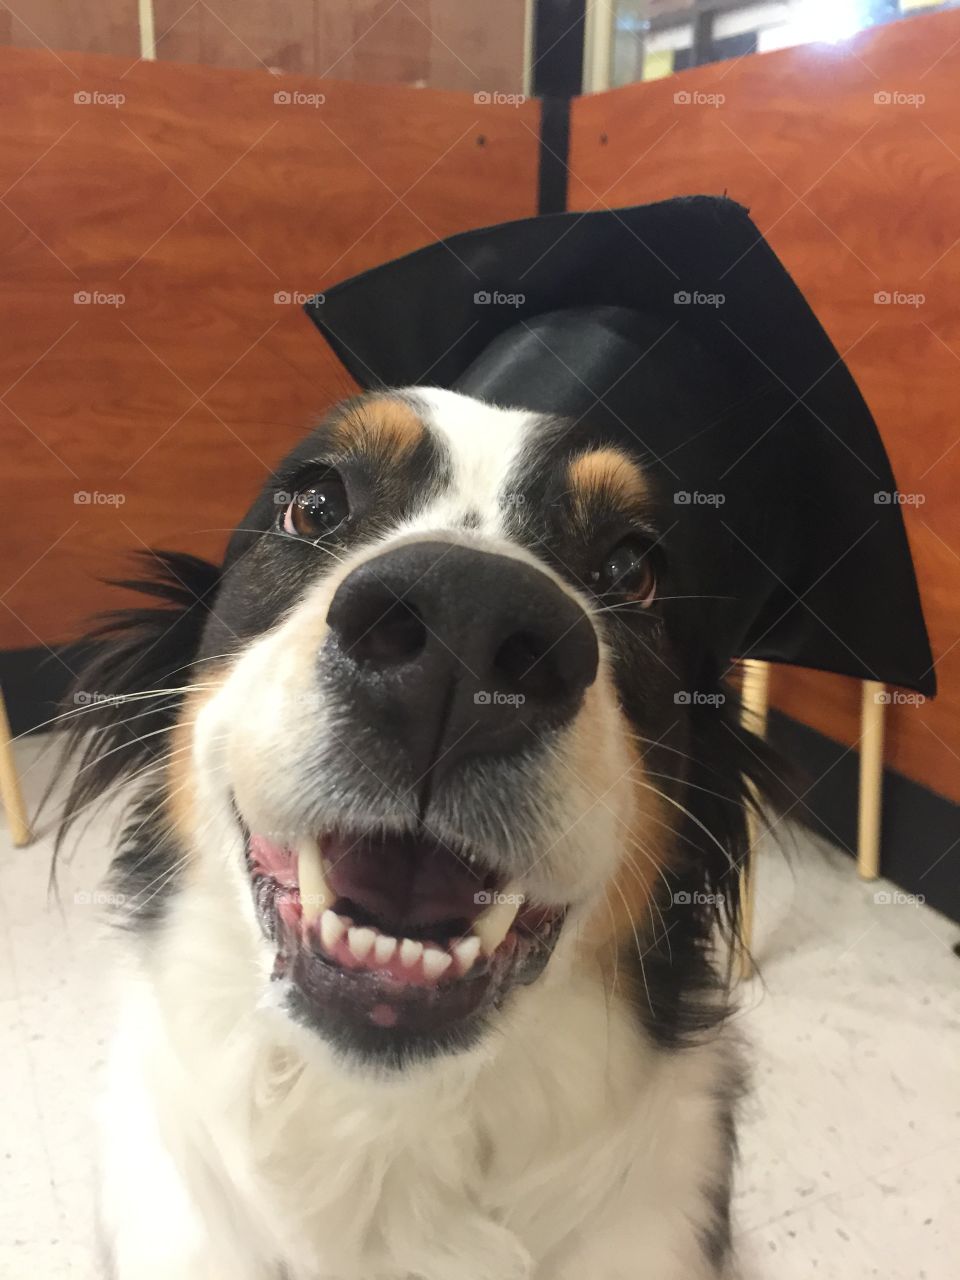 Proud moment graduating from dog school